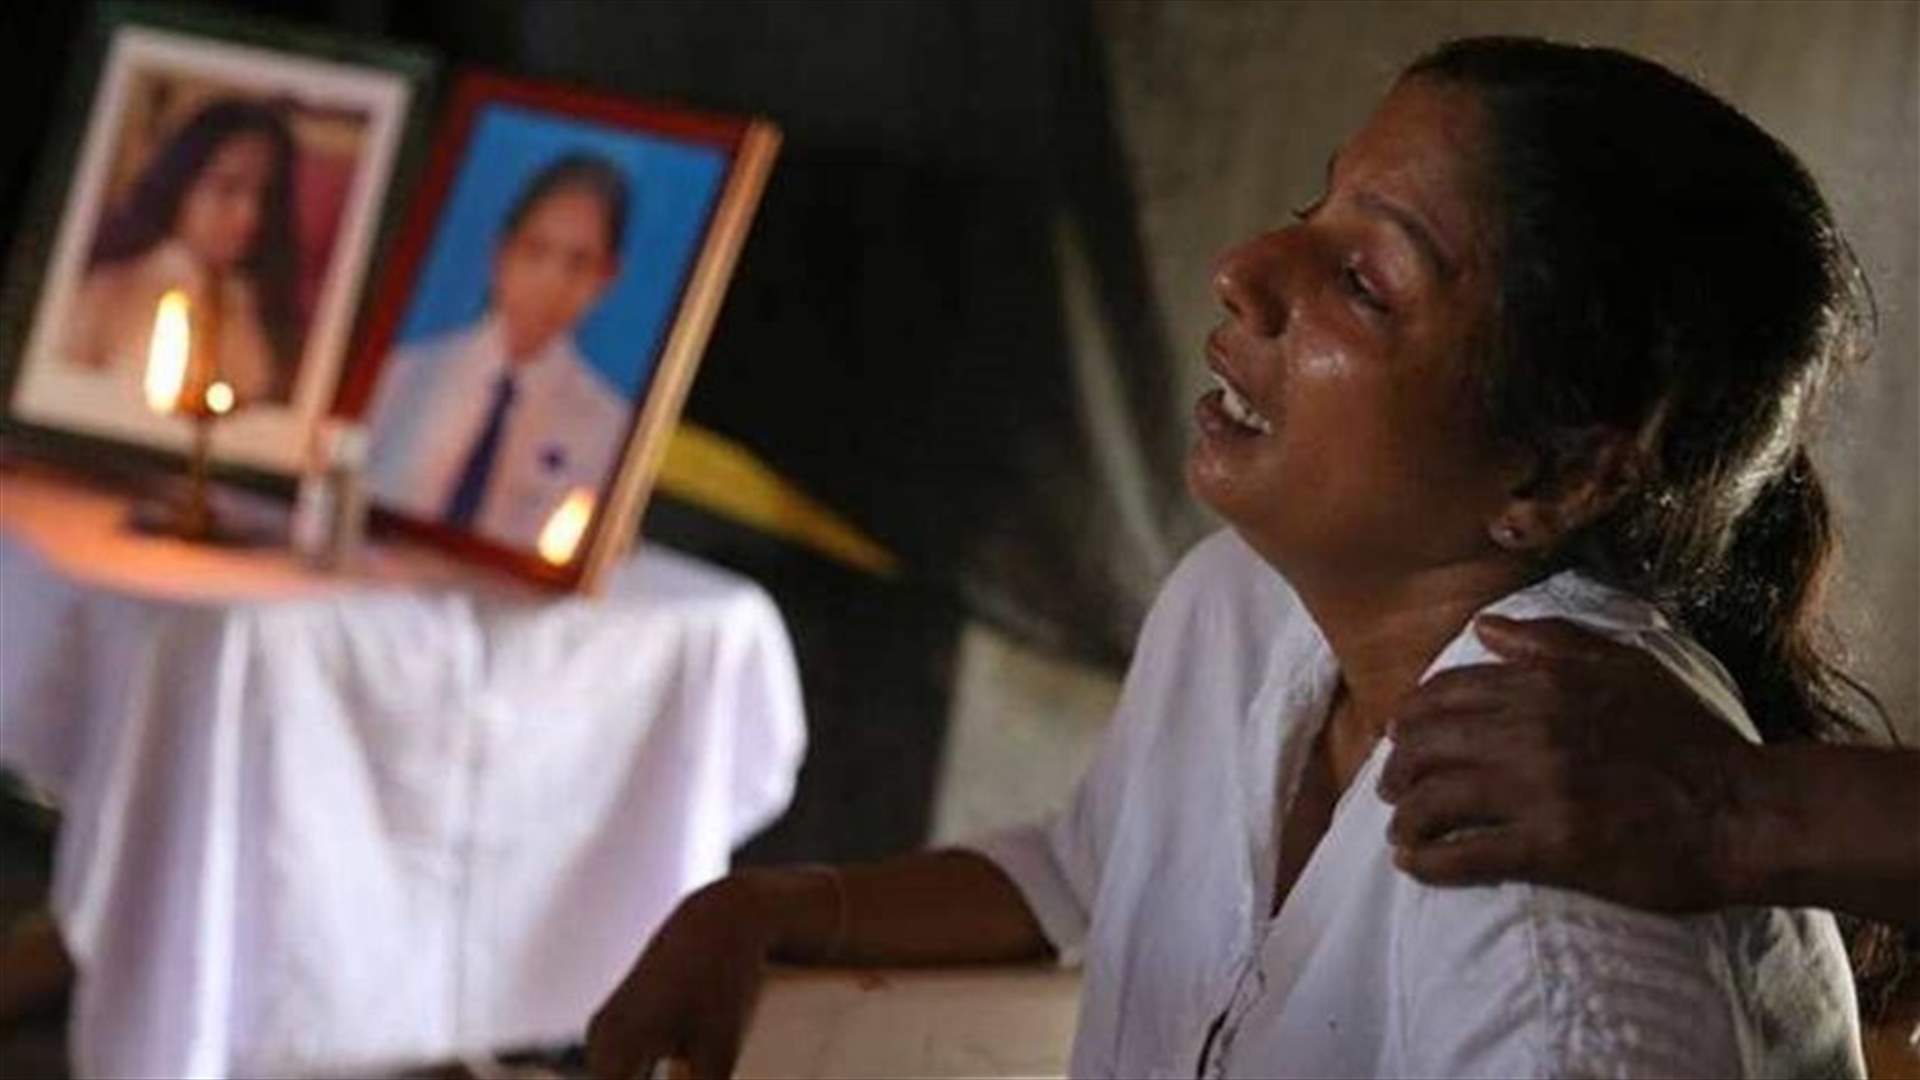 Sri Lanka marks one month since deadly blasts killed hundreds